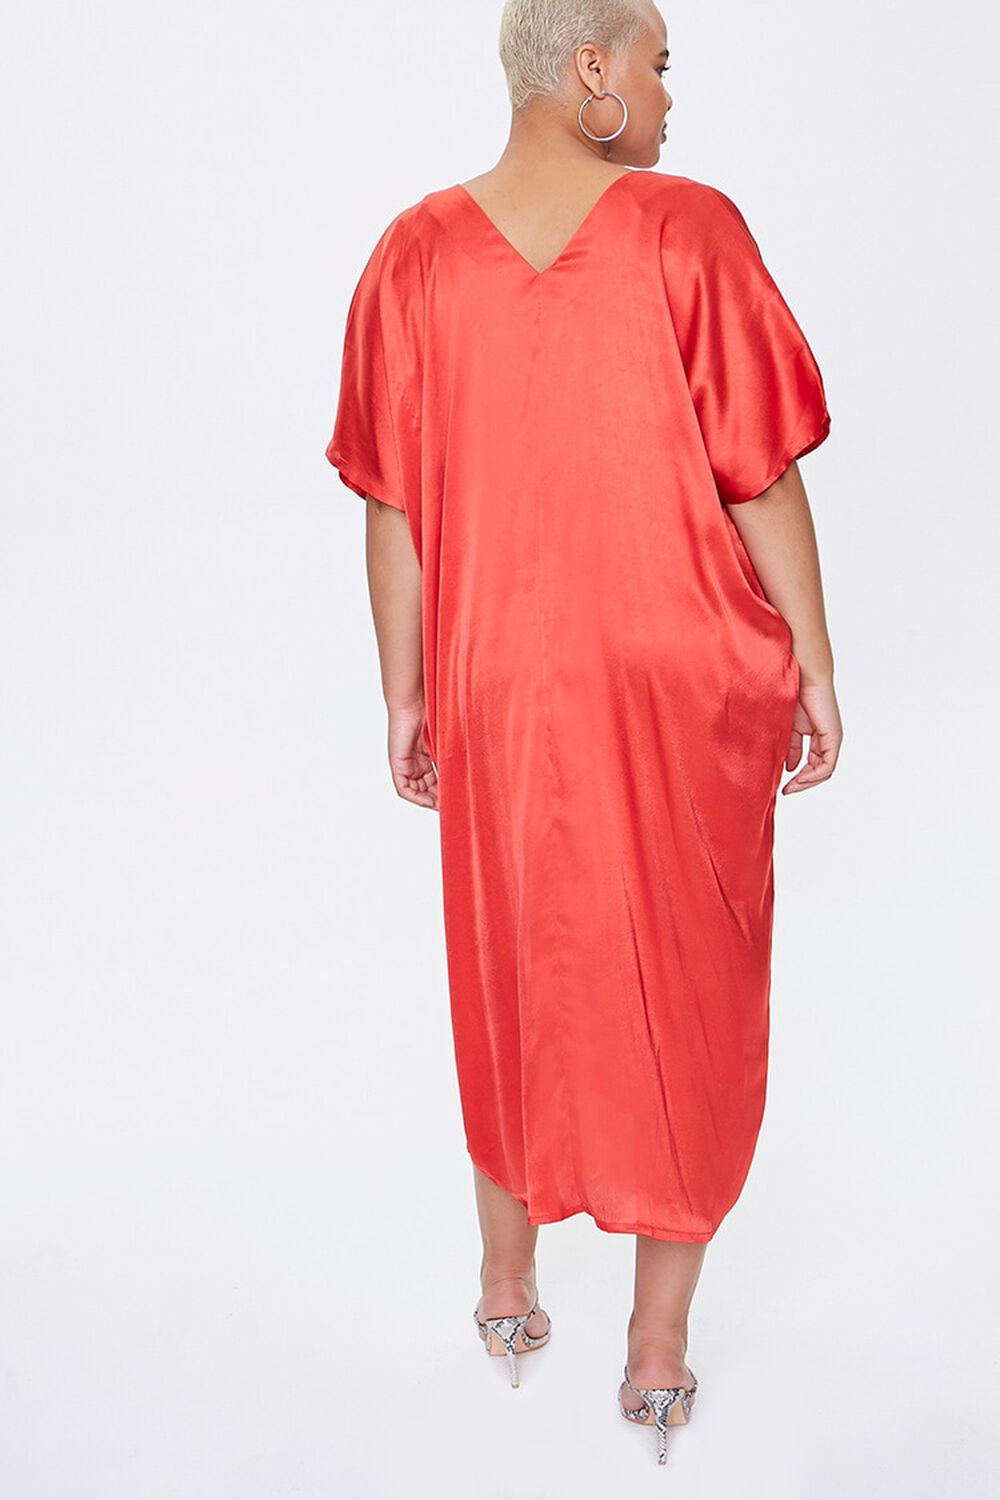 RED Plus Size Satin Midi Dress, image 3